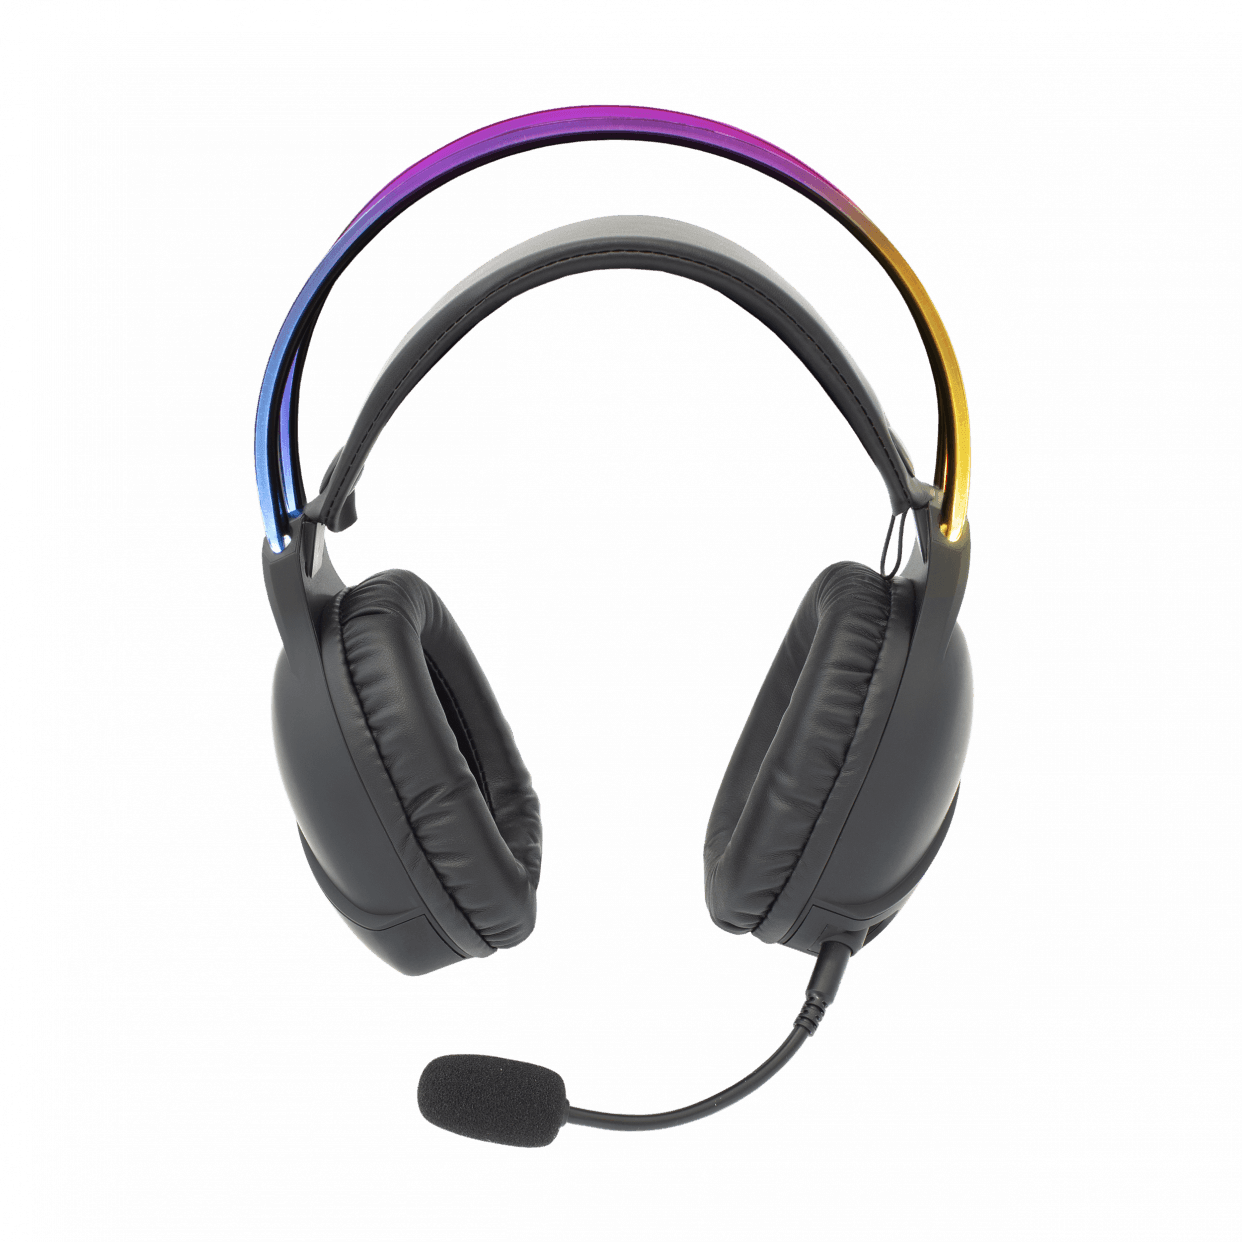 White Shark OX Gaming Headphones - GameStore.mt | Powered by Flutisat